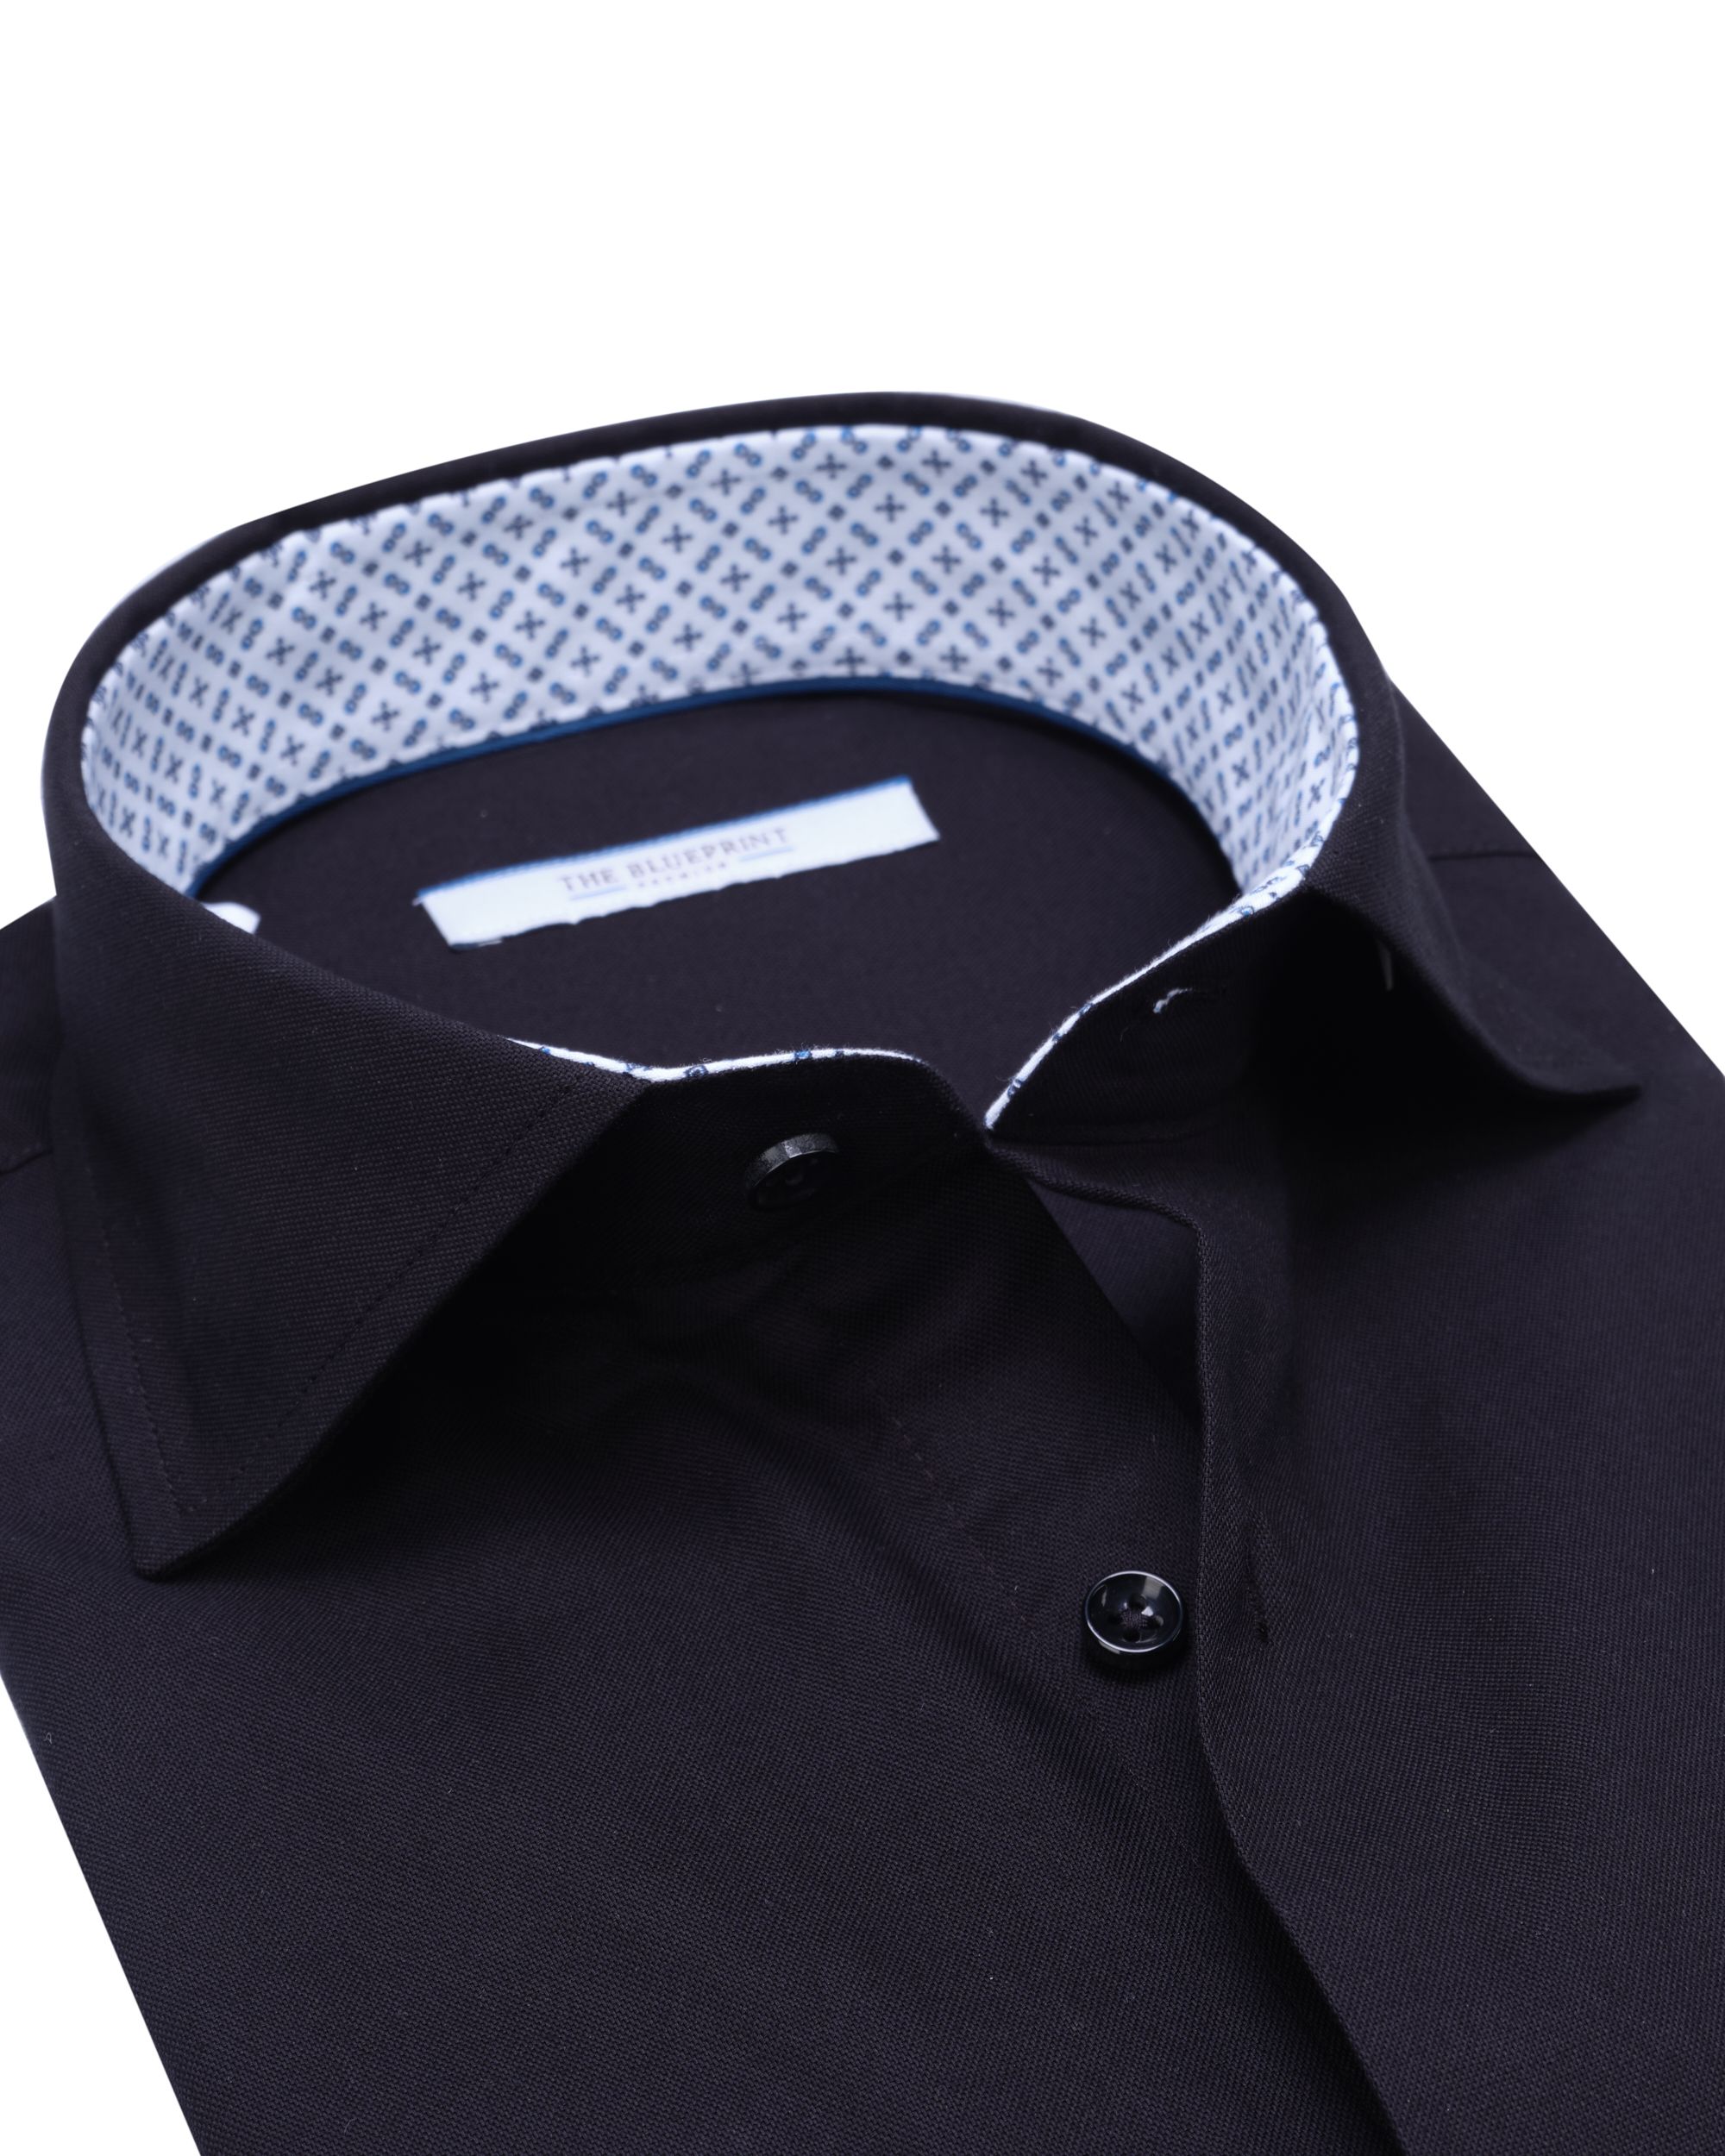 The BLUEPRINT Premium Casual Overhemd LM Black 082233-001-L